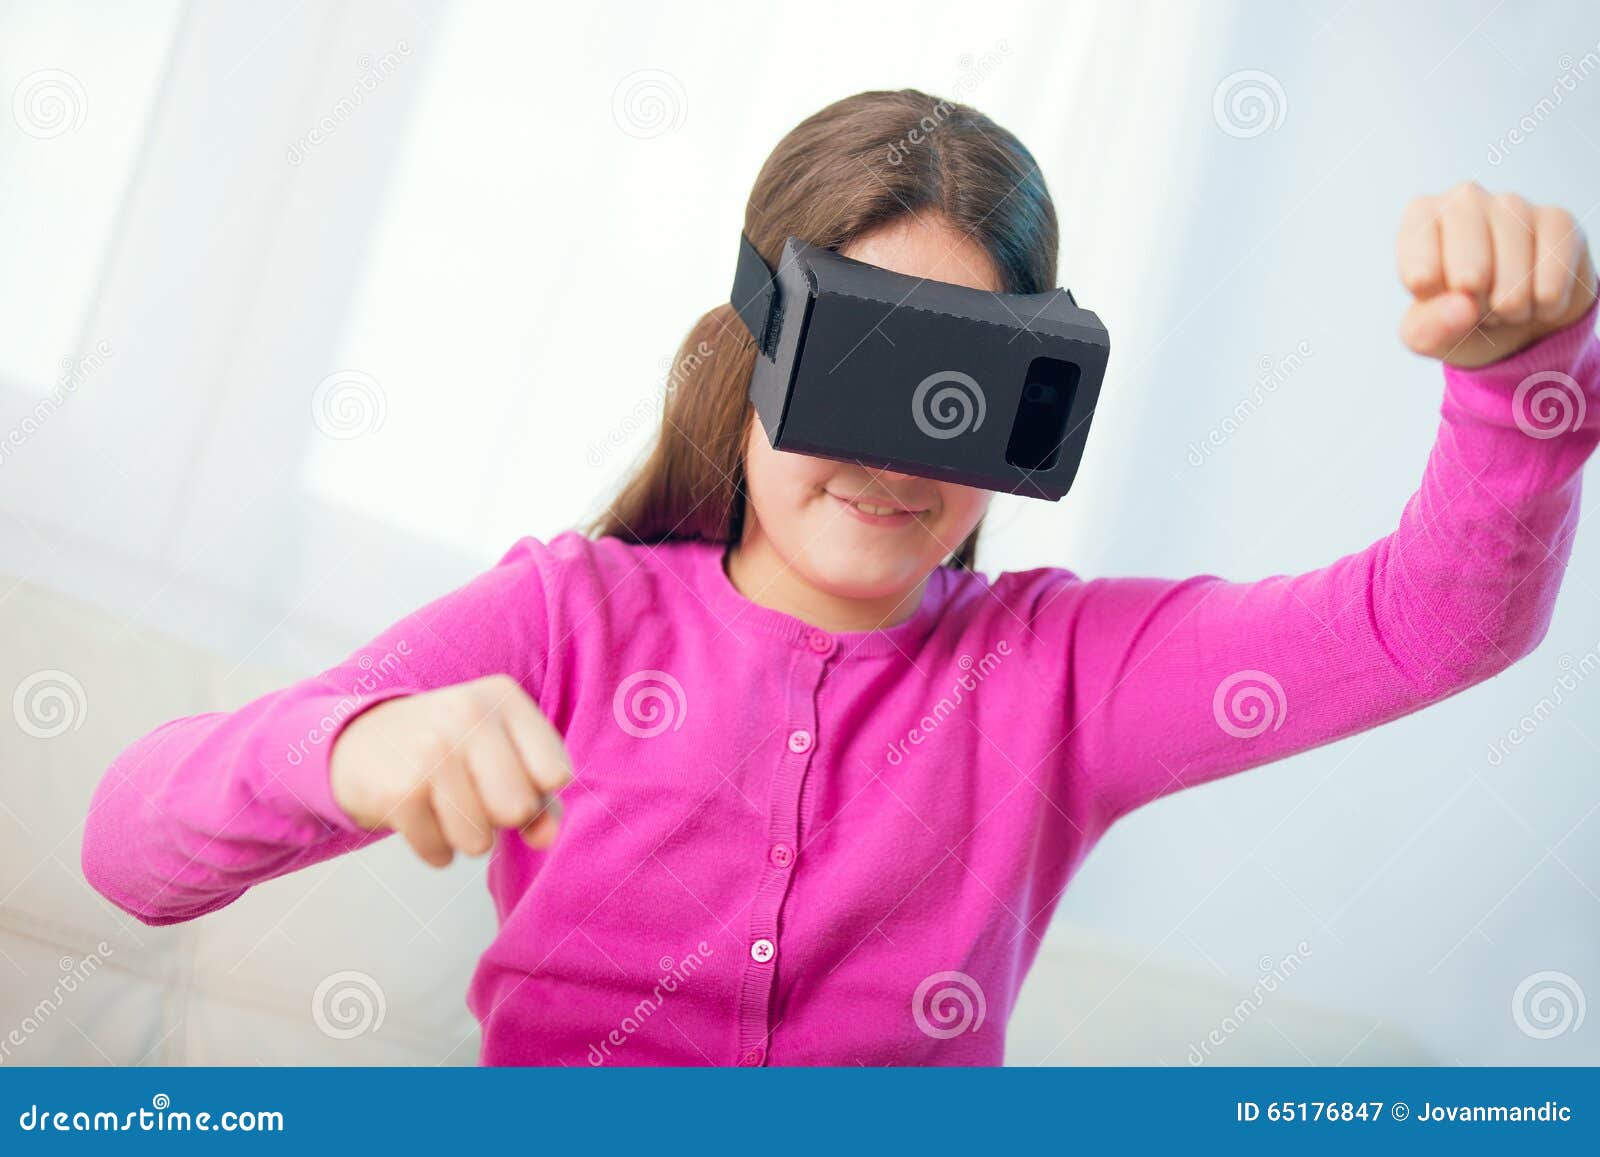 Woman wearing VR headset — Stock Photo © kchungtw #130915044